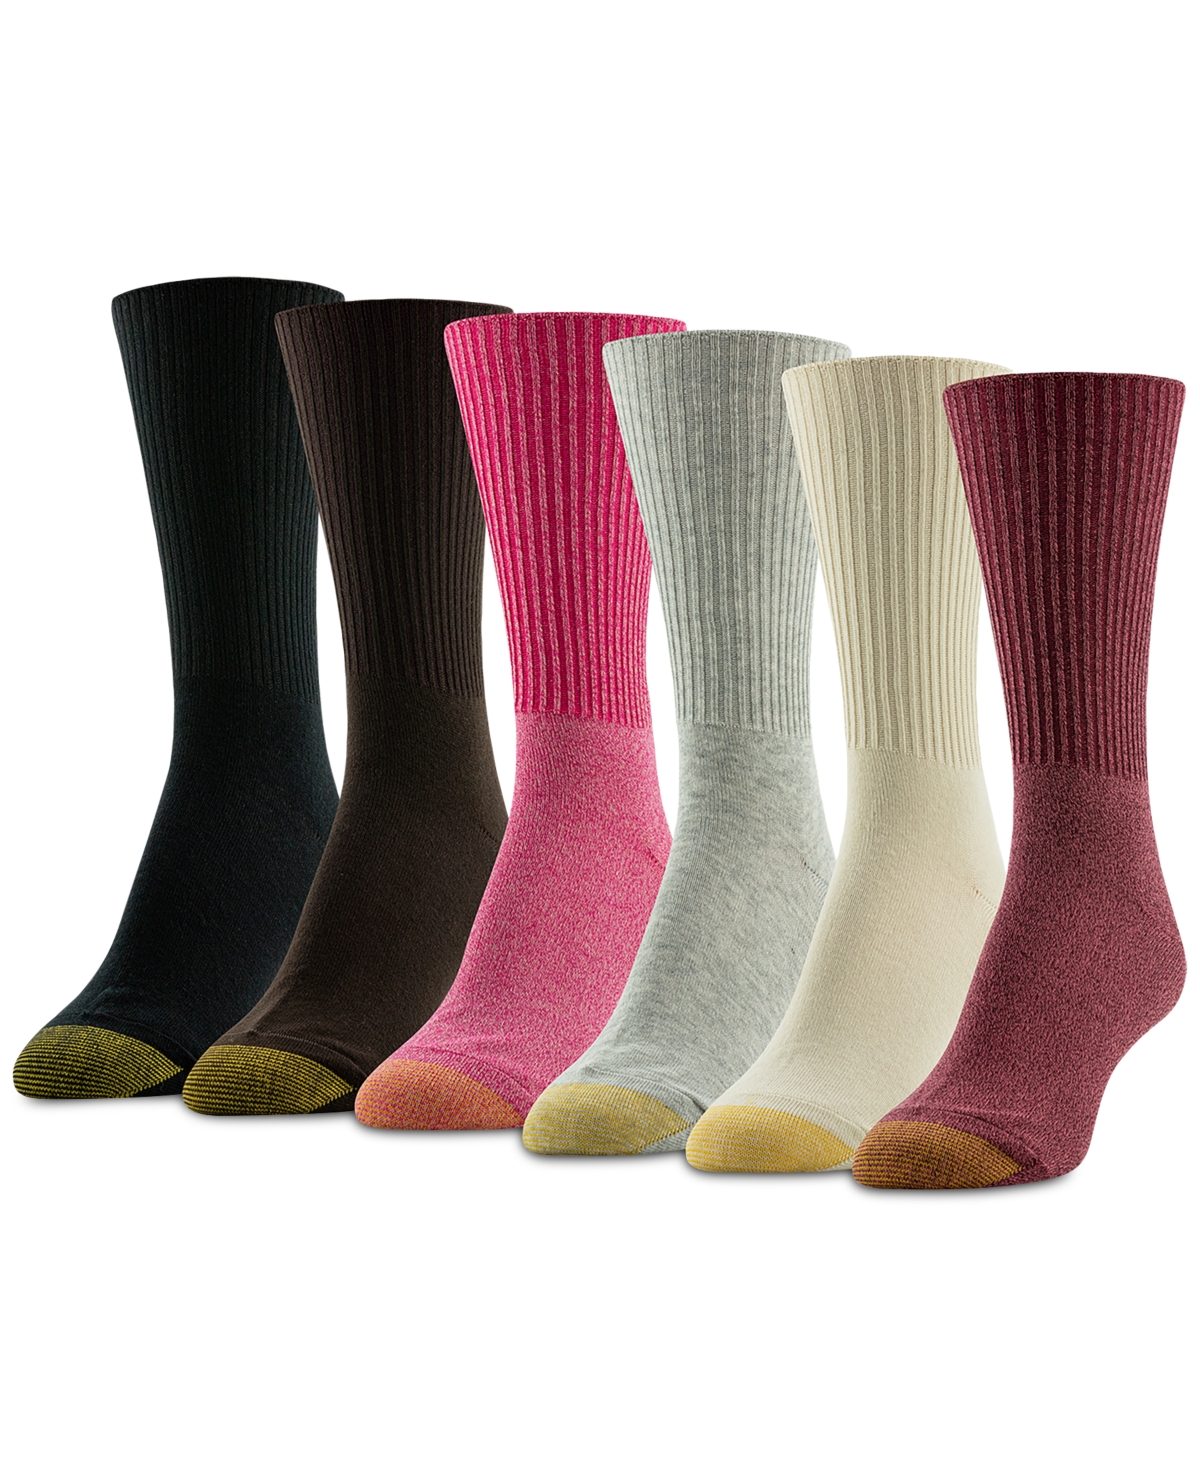 Women's 6-Pk. Turn Cuff Socks - Asst